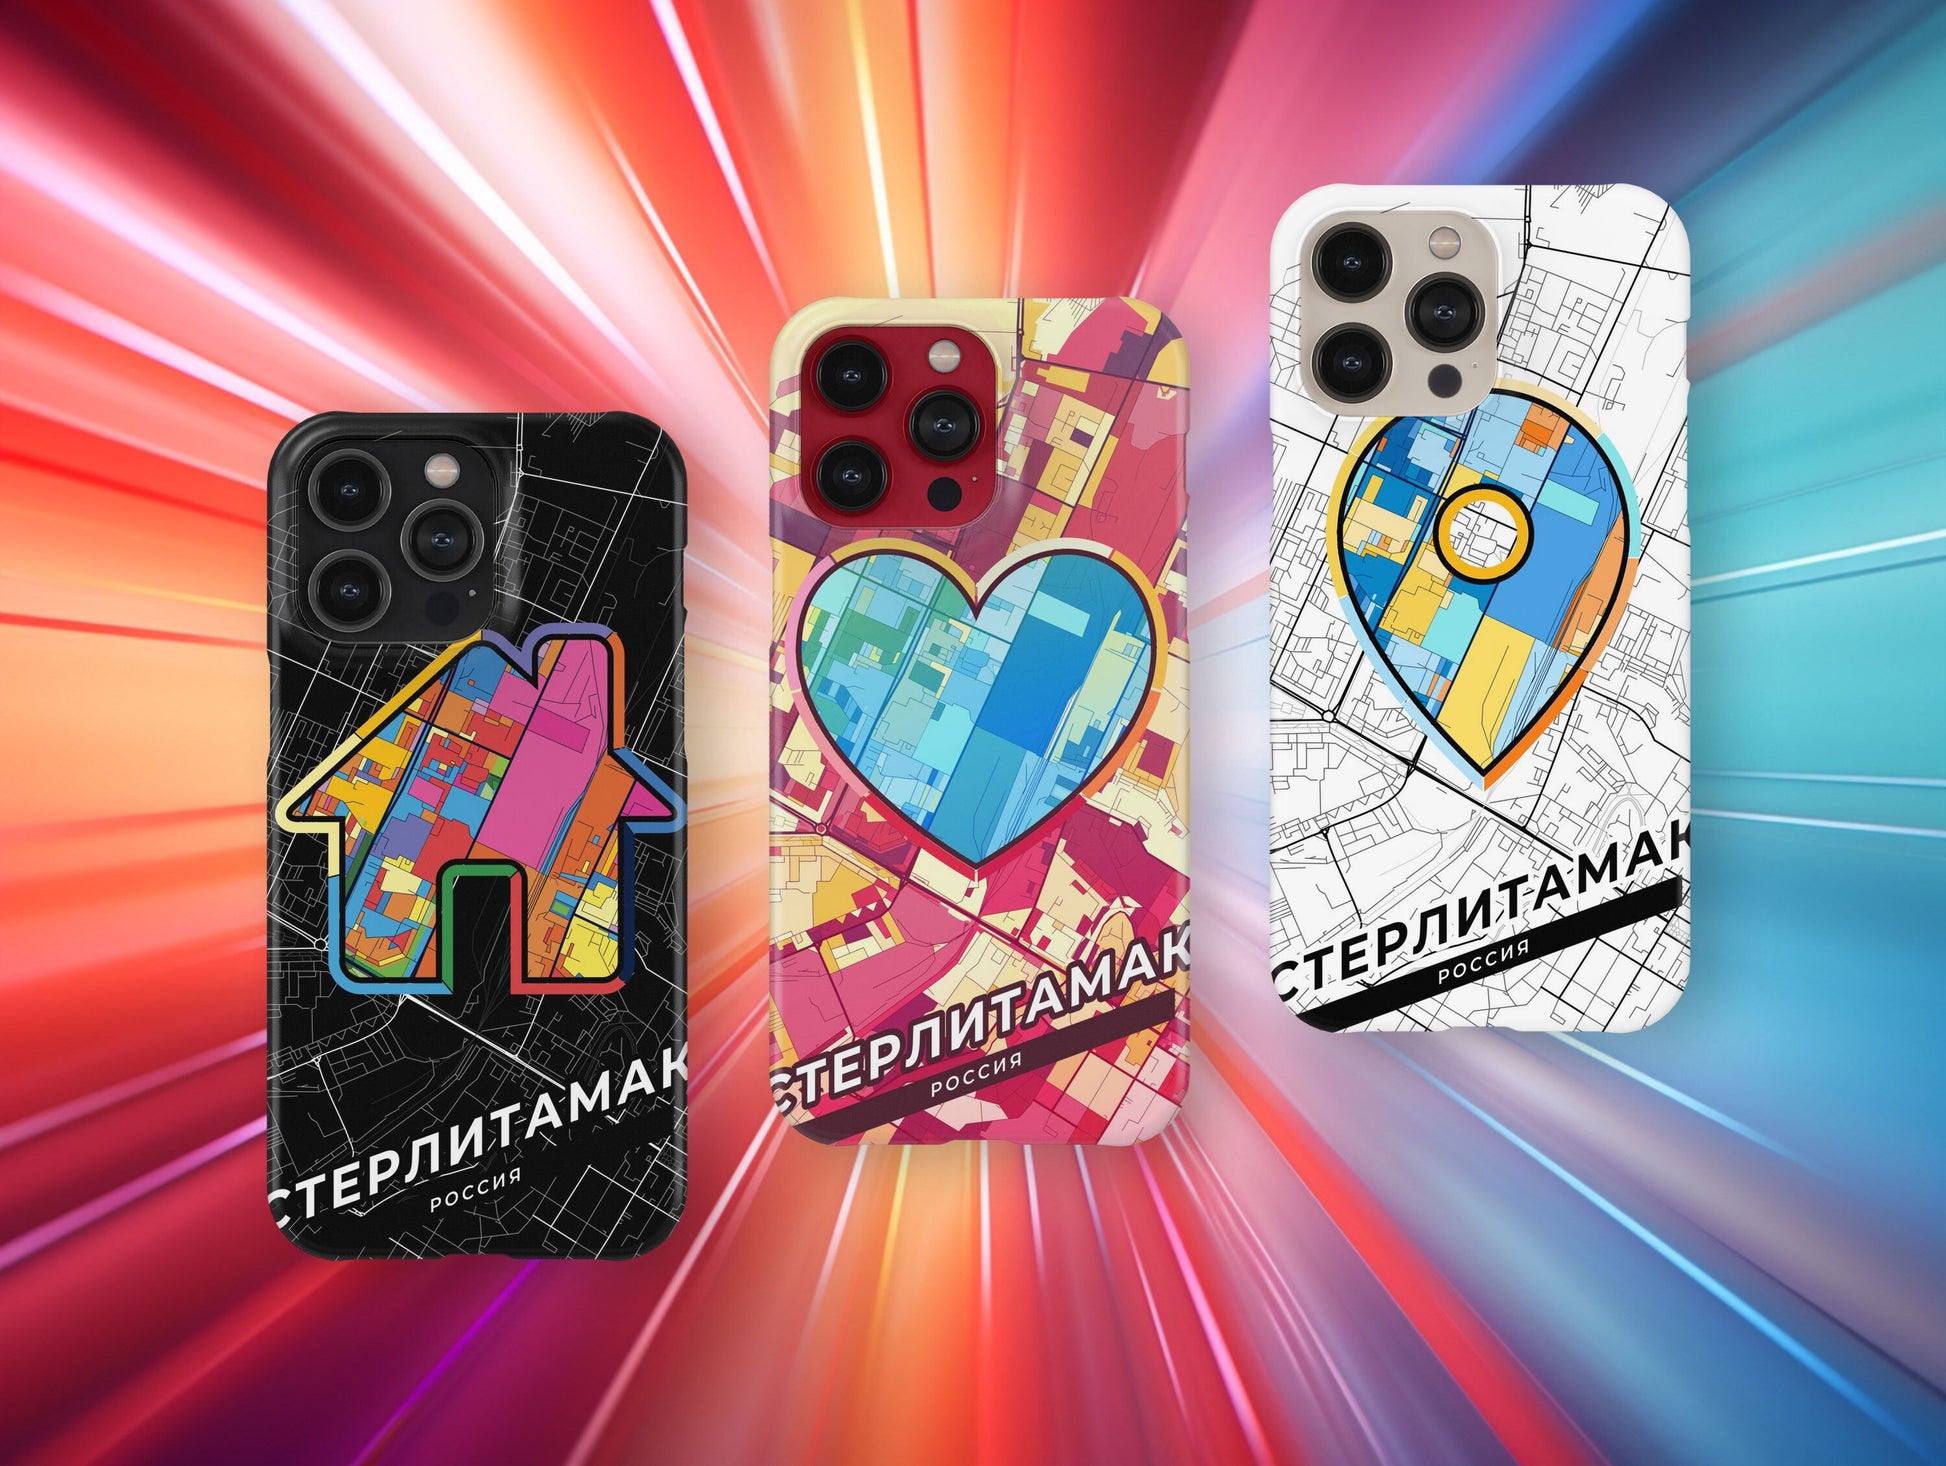 Sterlitamak Russia slim phone case with colorful icon